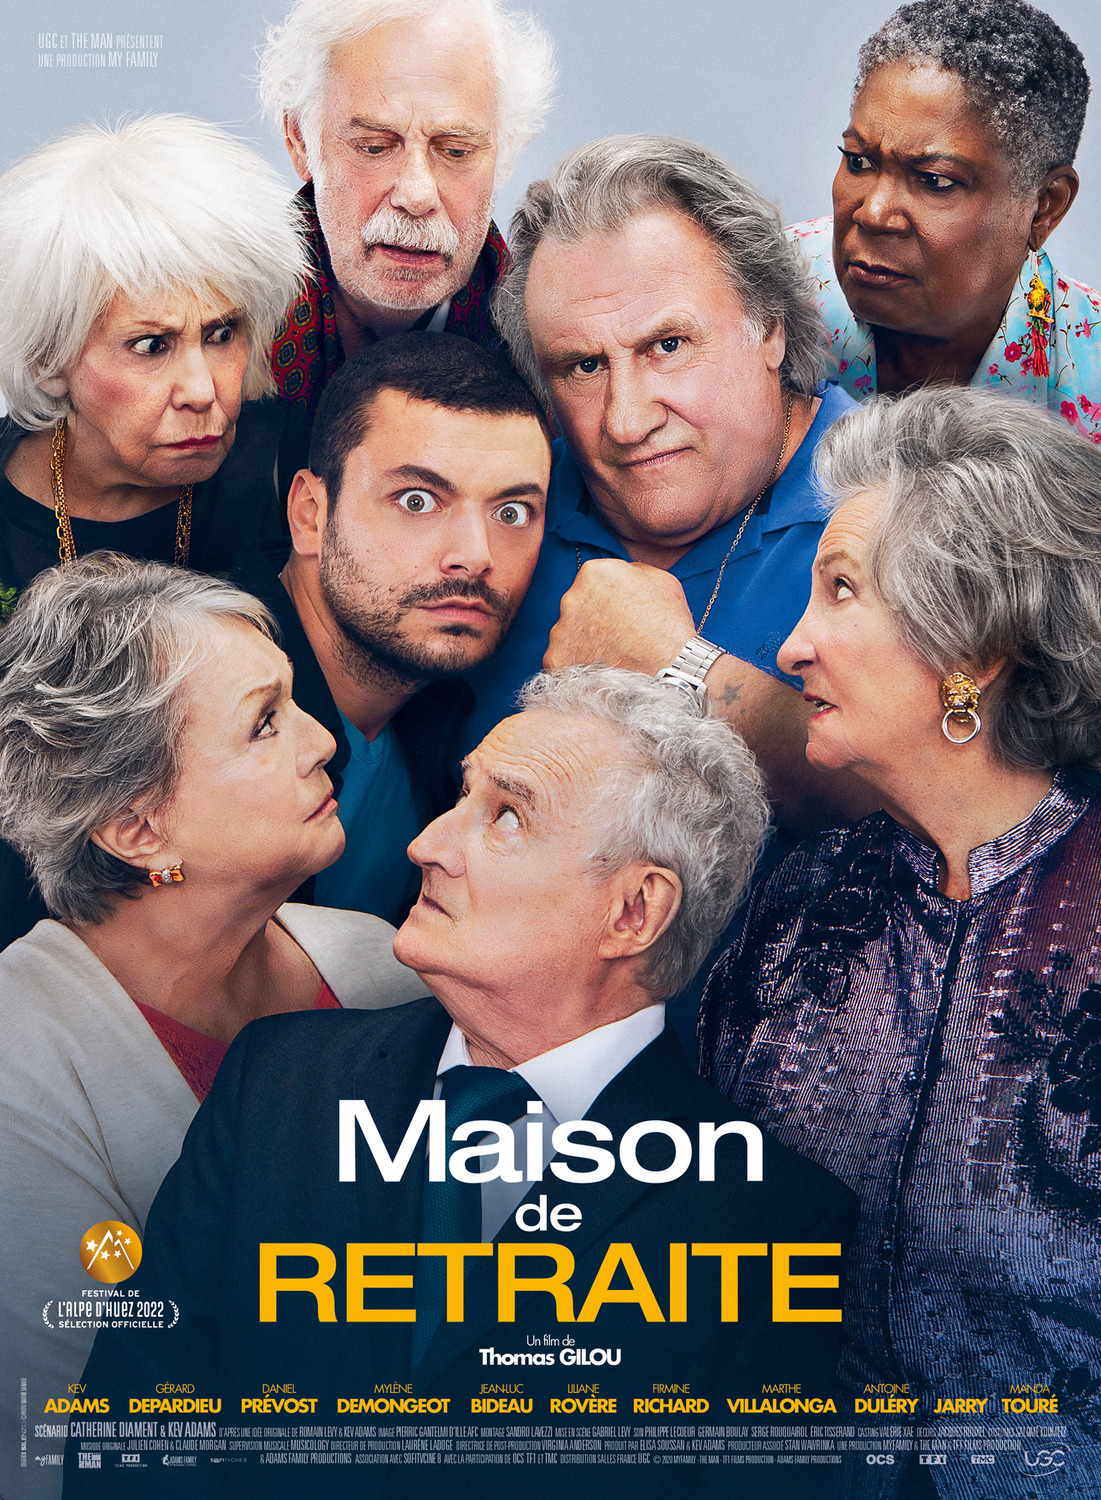 Extra Large Movie Poster Image for Maison de retraite 